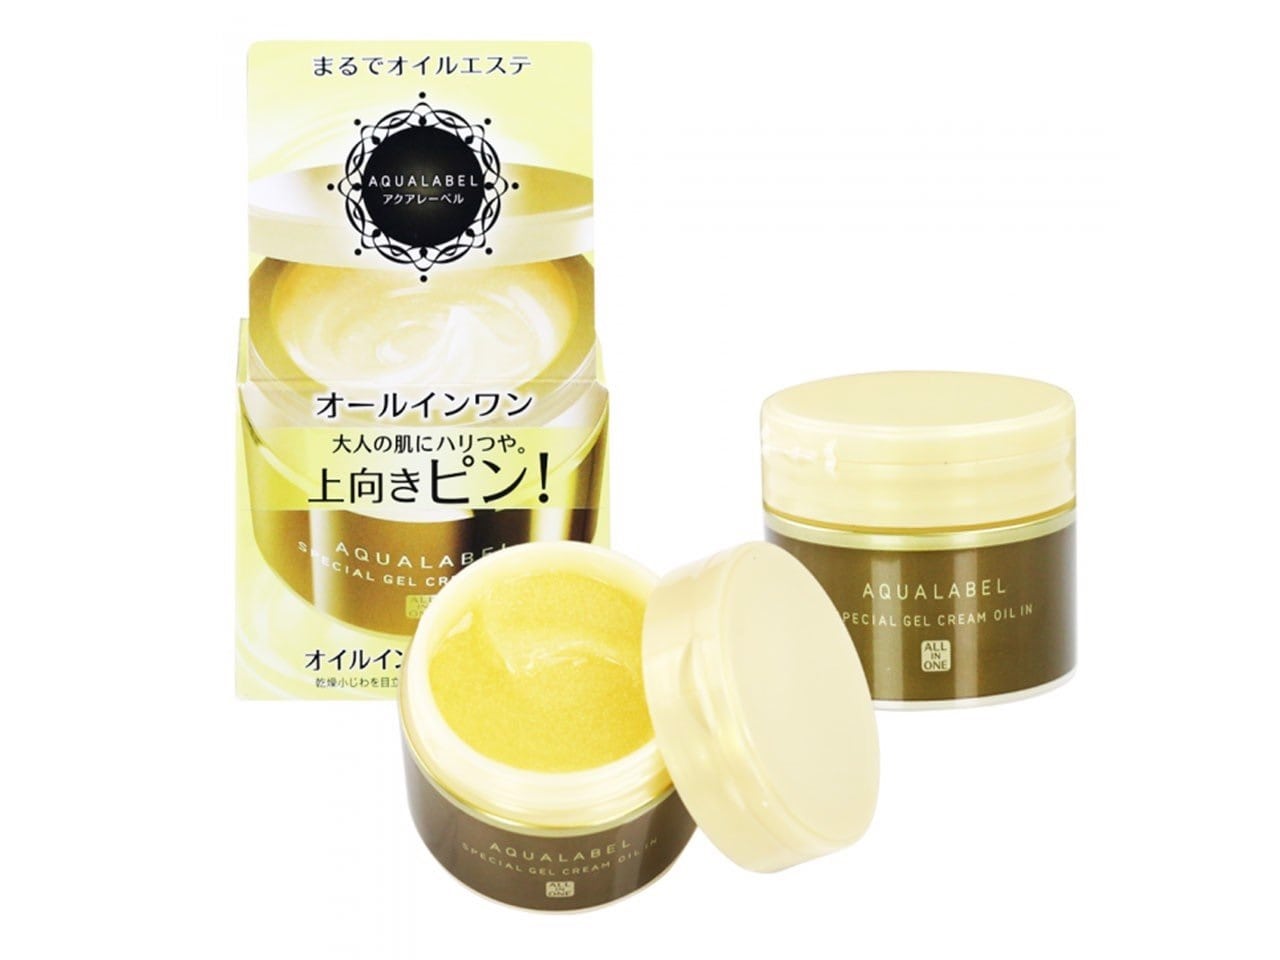 Shiseido Aqualabel vàng